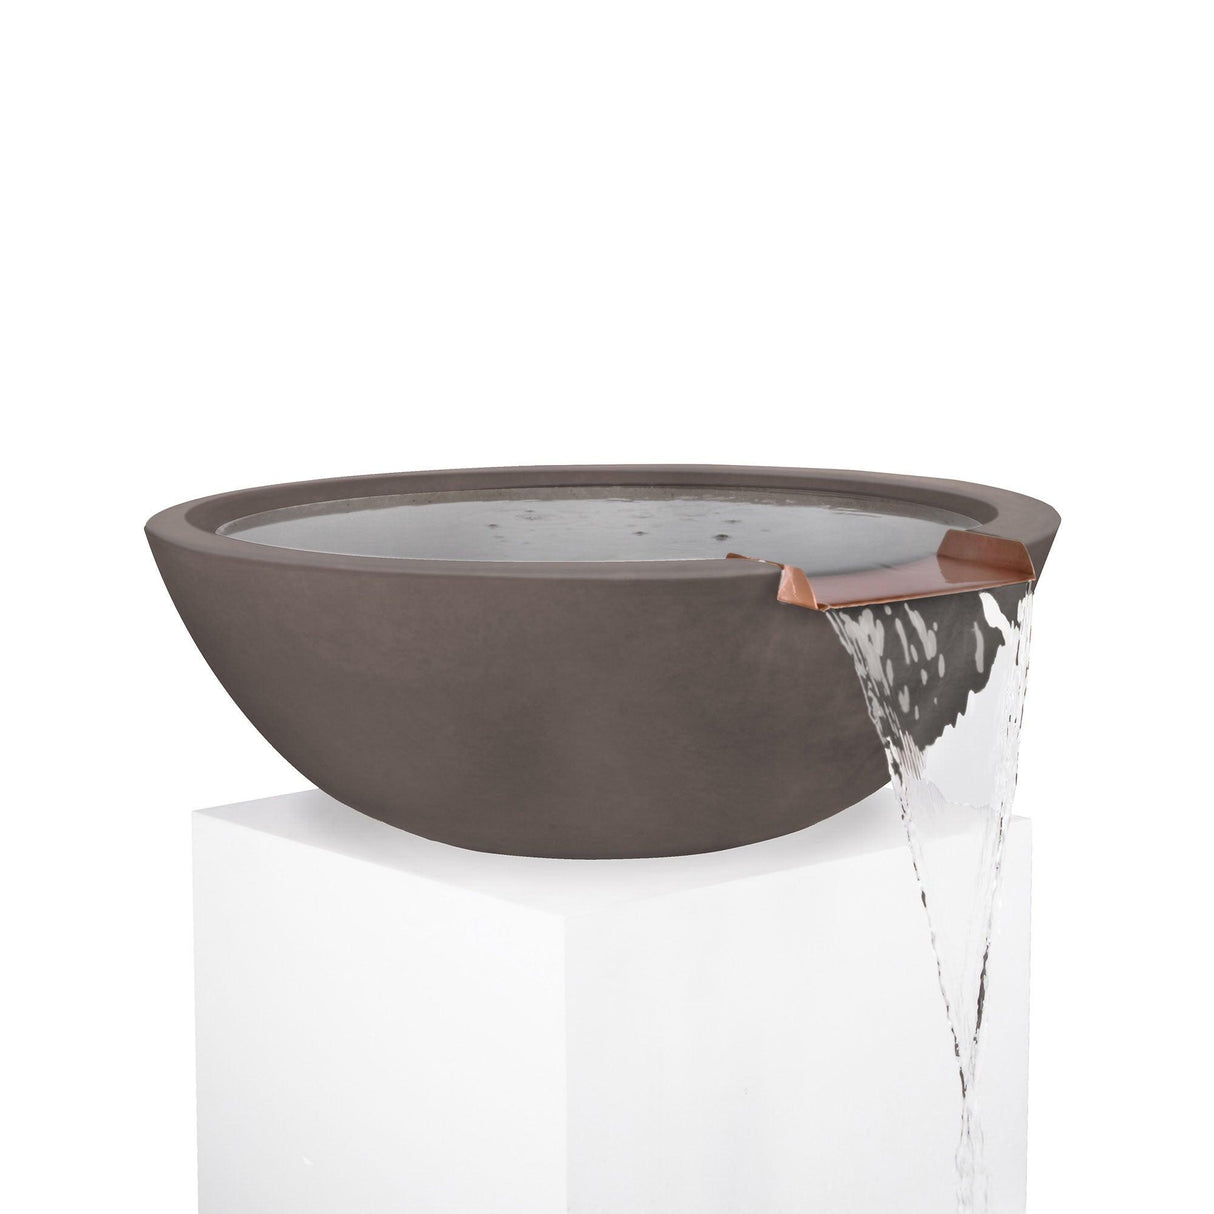 The Outdoor Plus Sedona Concrete Water Bowls